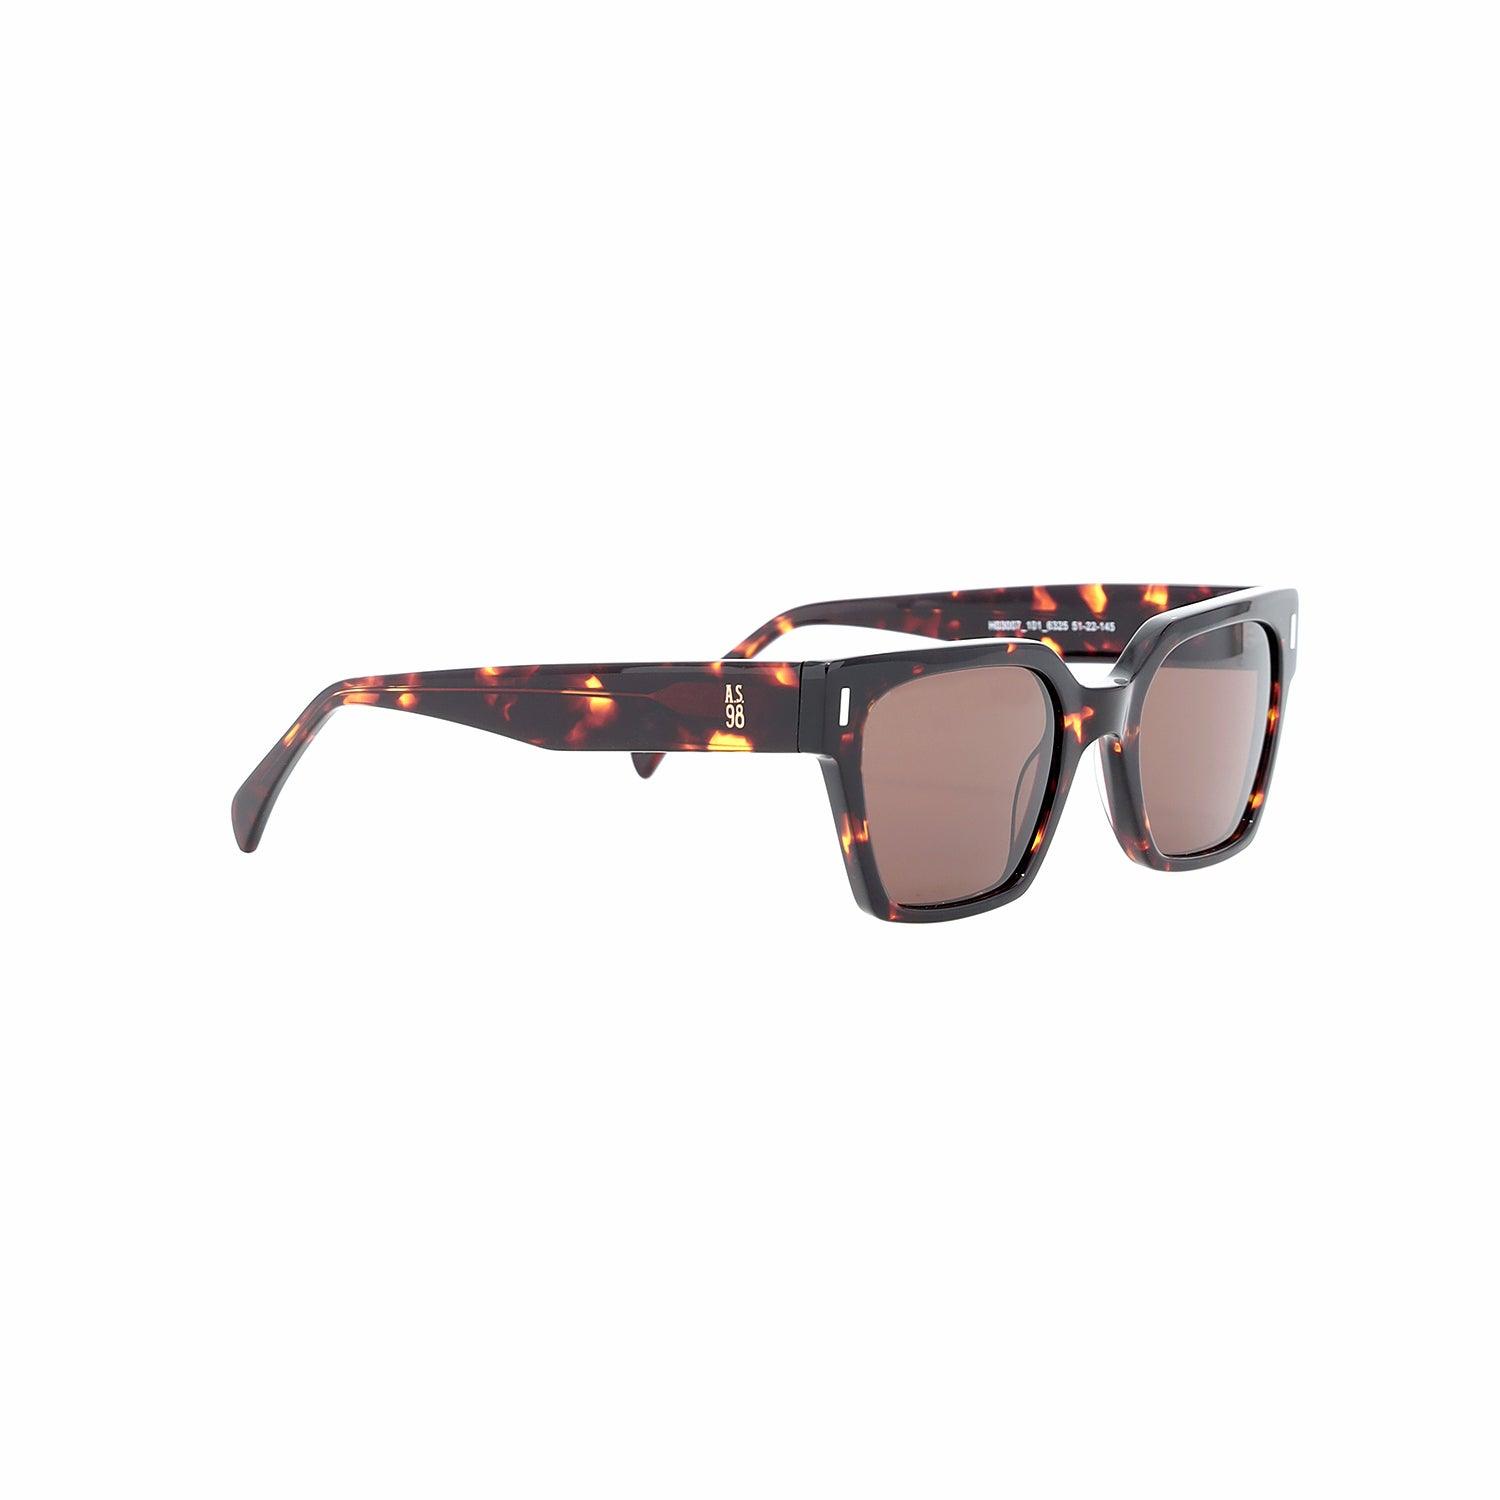 A.S.98 Sunglasses - Kirk - A.S. 98 - 